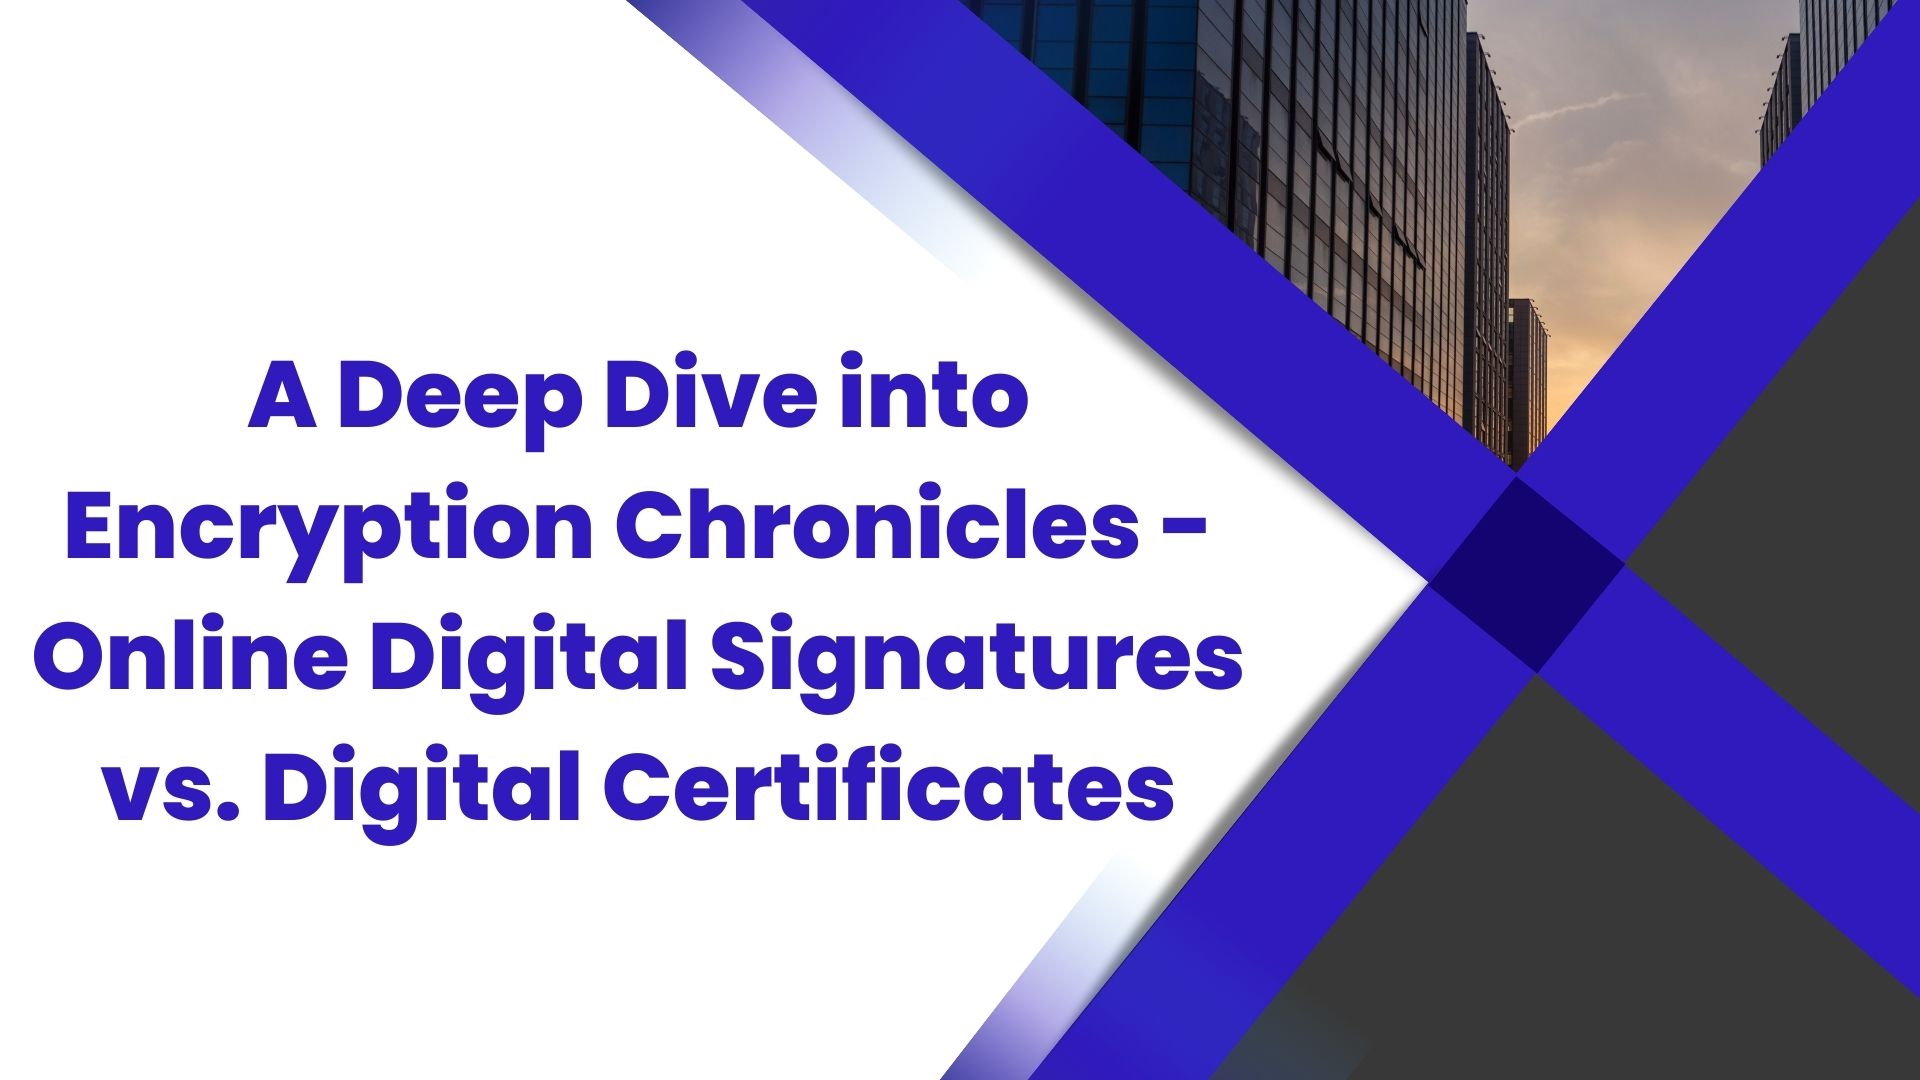 A Deep Dive into Encryption Chronicles - Online Digital Signatures vs. Digital Certificates